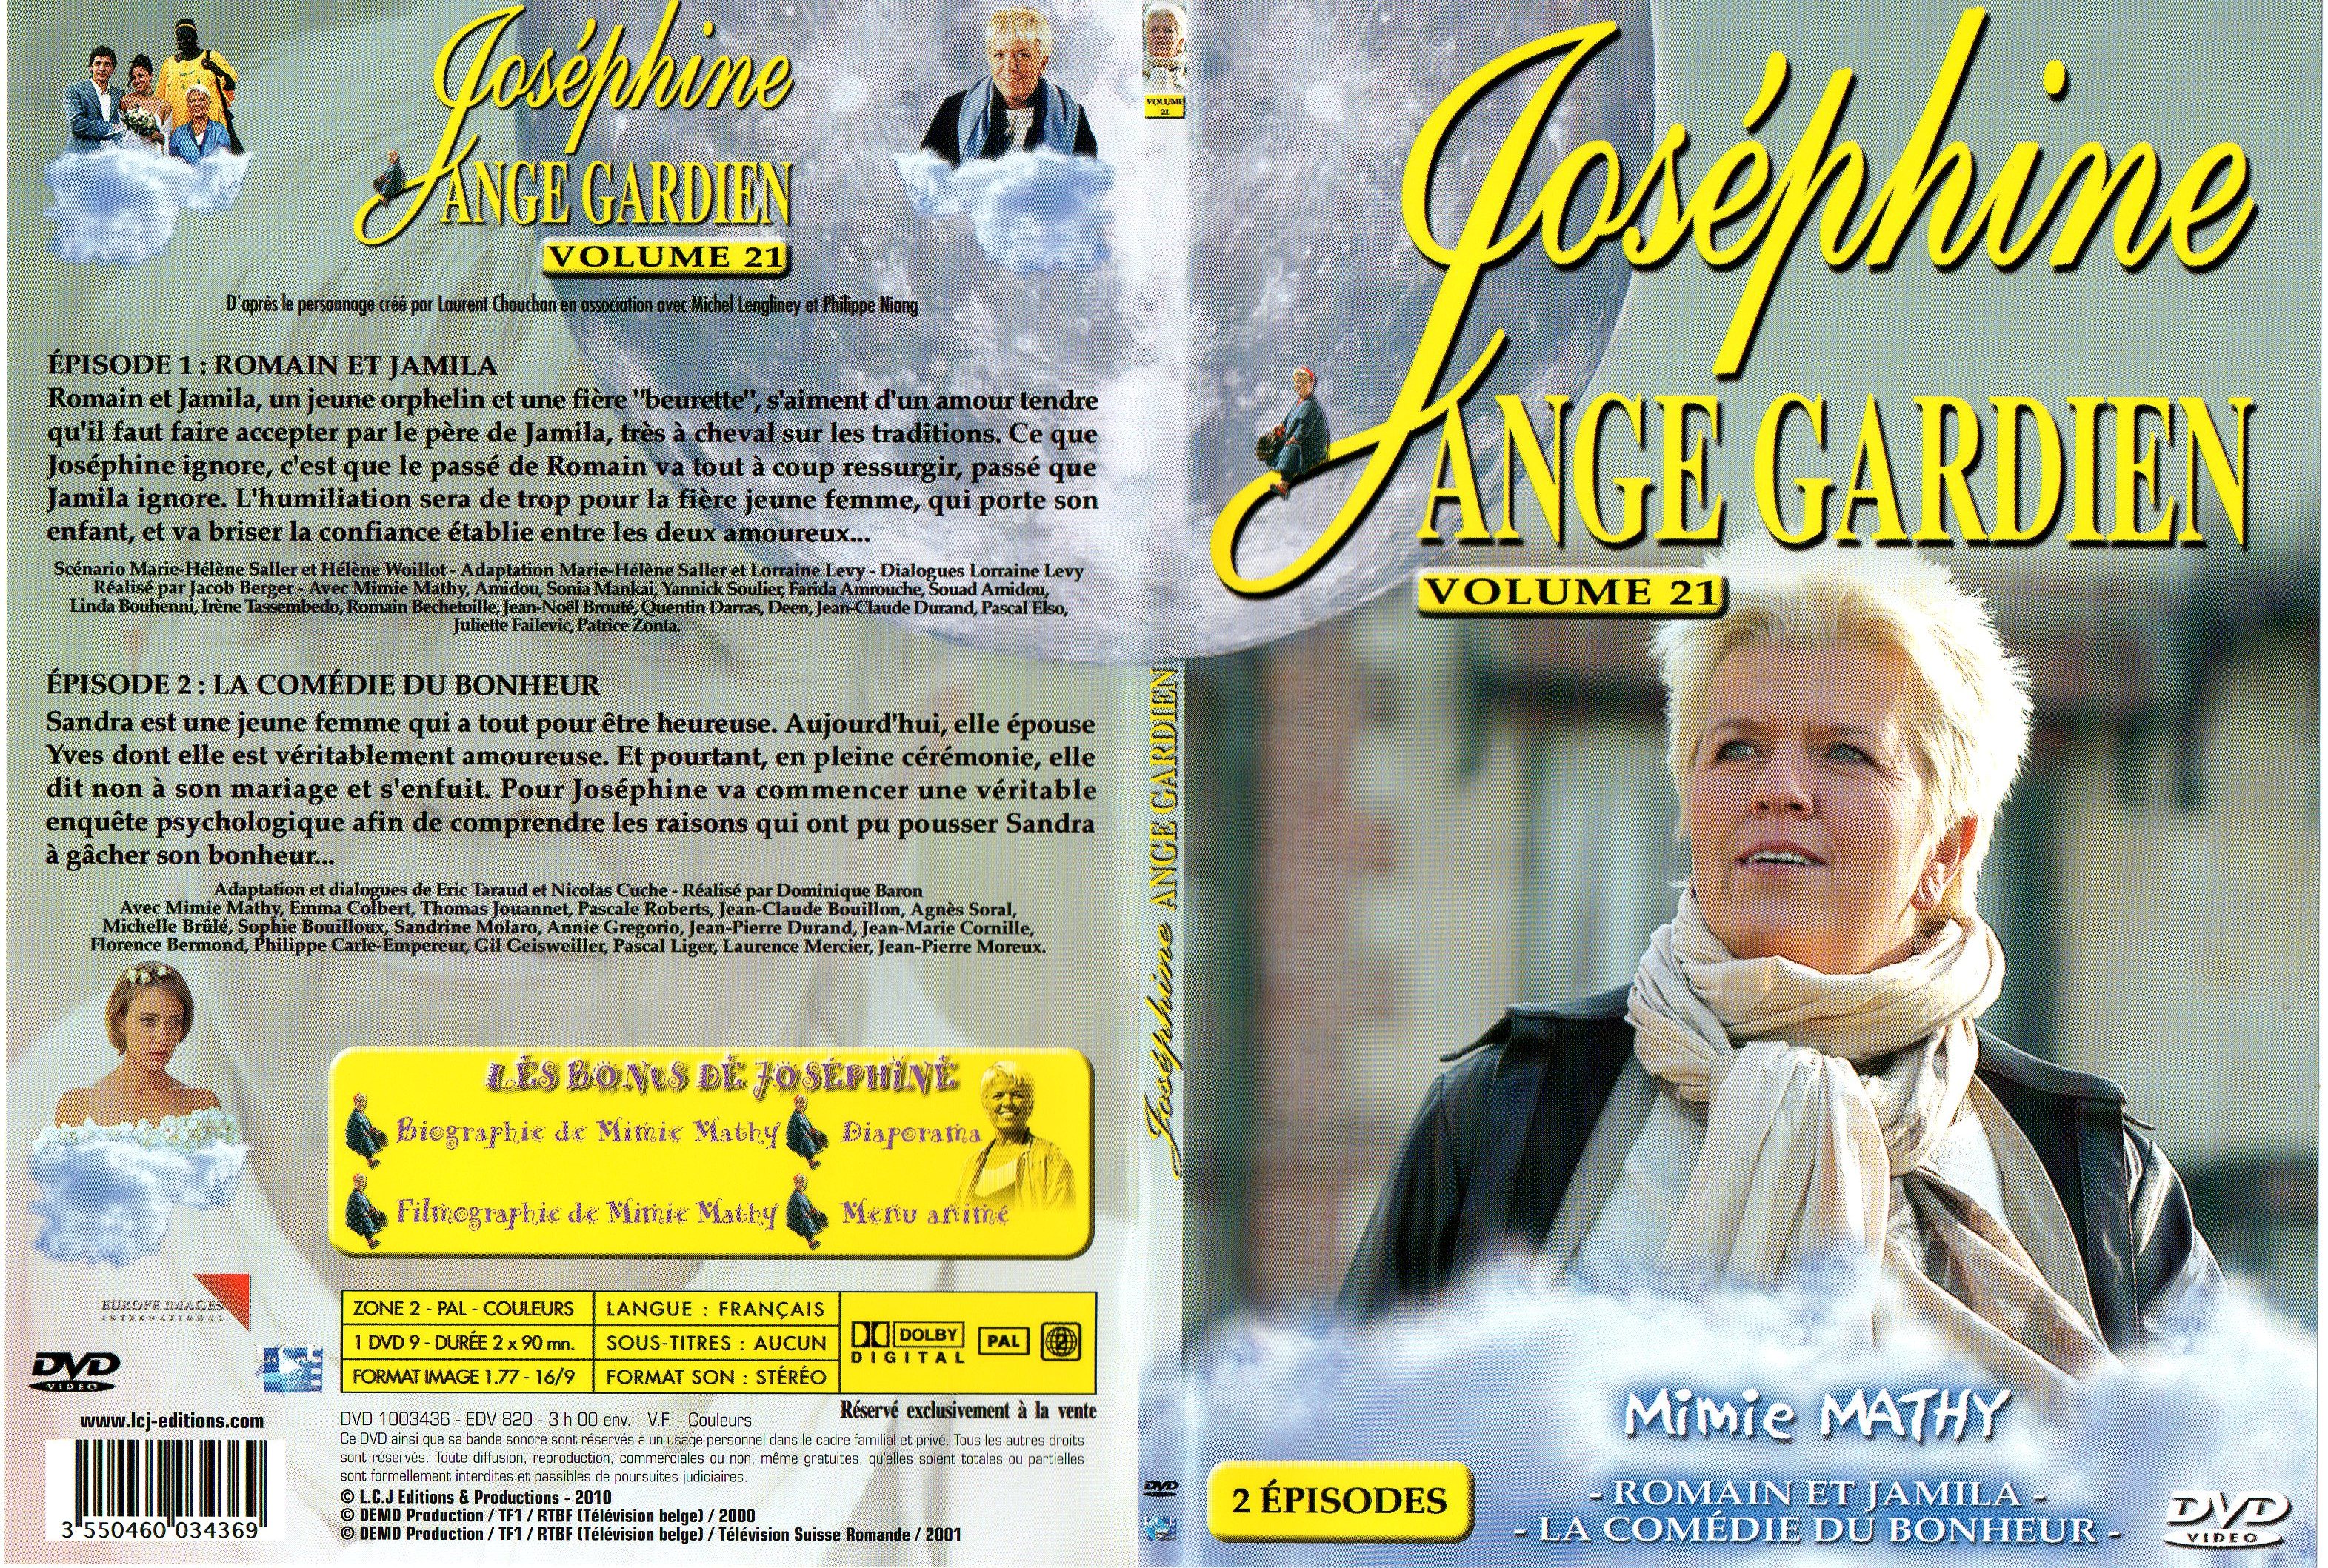 Jaquette DVD Josphine Ange Gardien saison 5 DVD 21